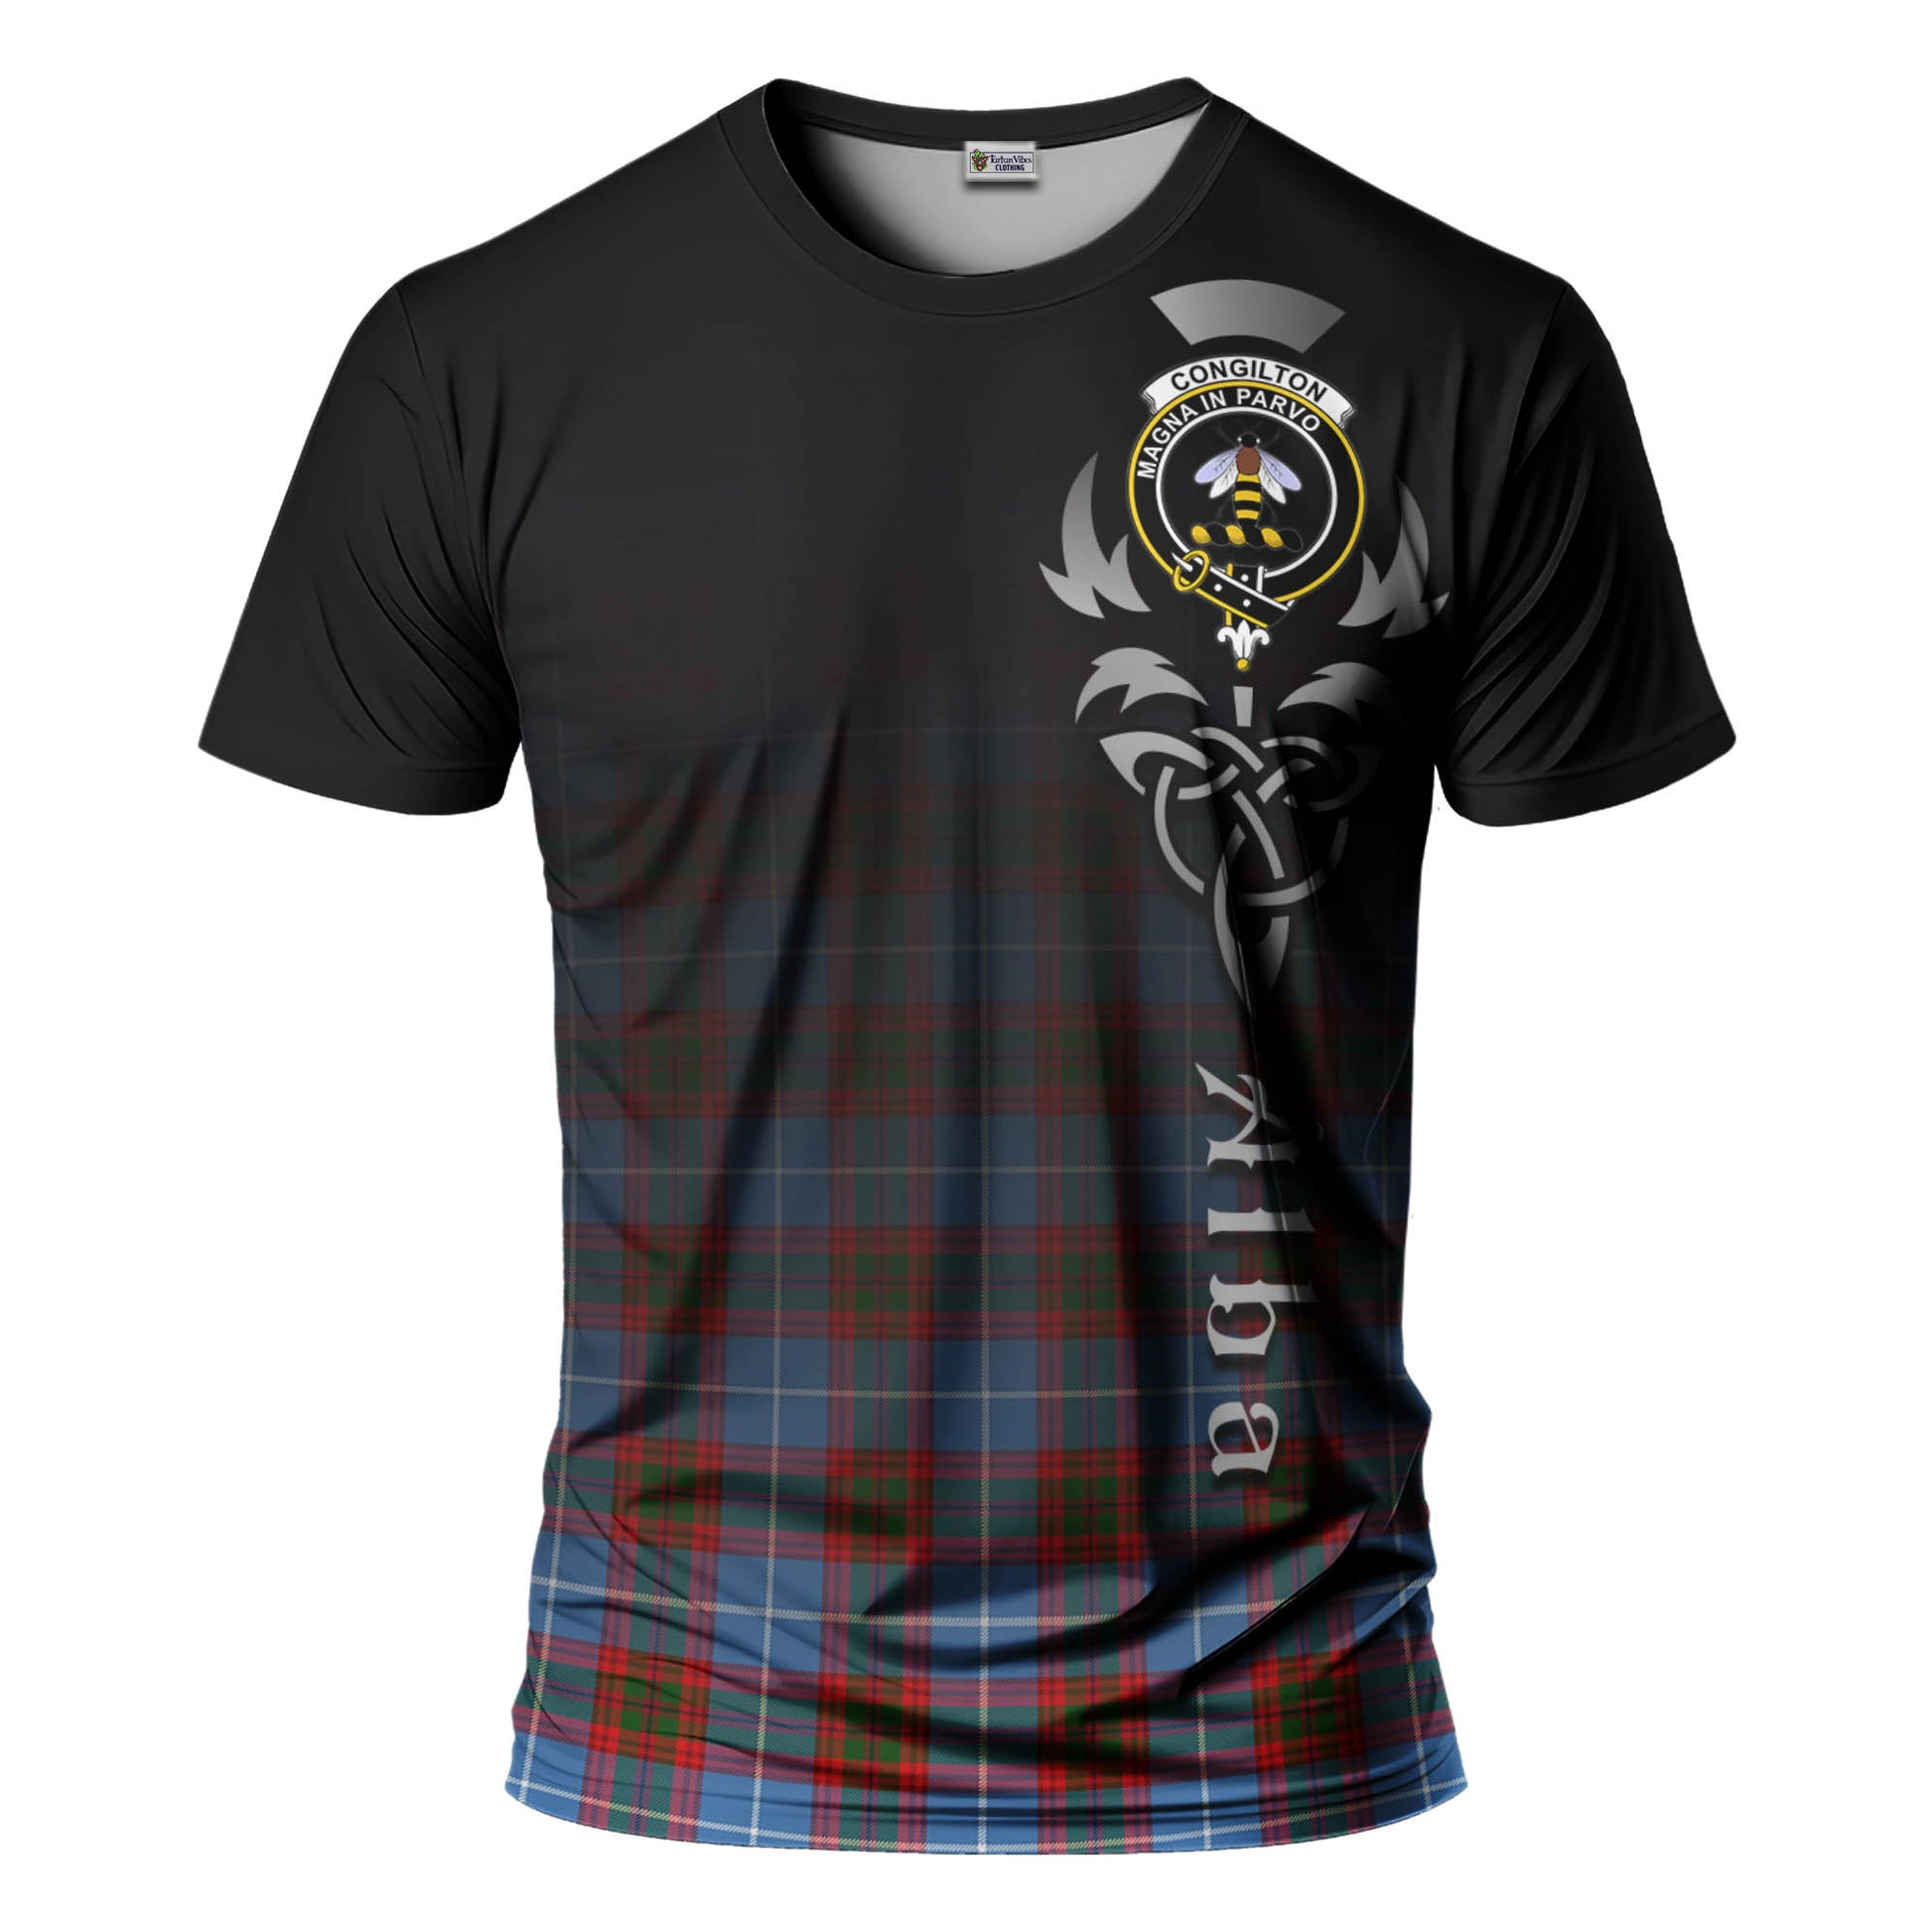 Tartan Vibes Clothing Congilton Tartan T-Shirt Featuring Alba Gu Brath Family Crest Celtic Inspired